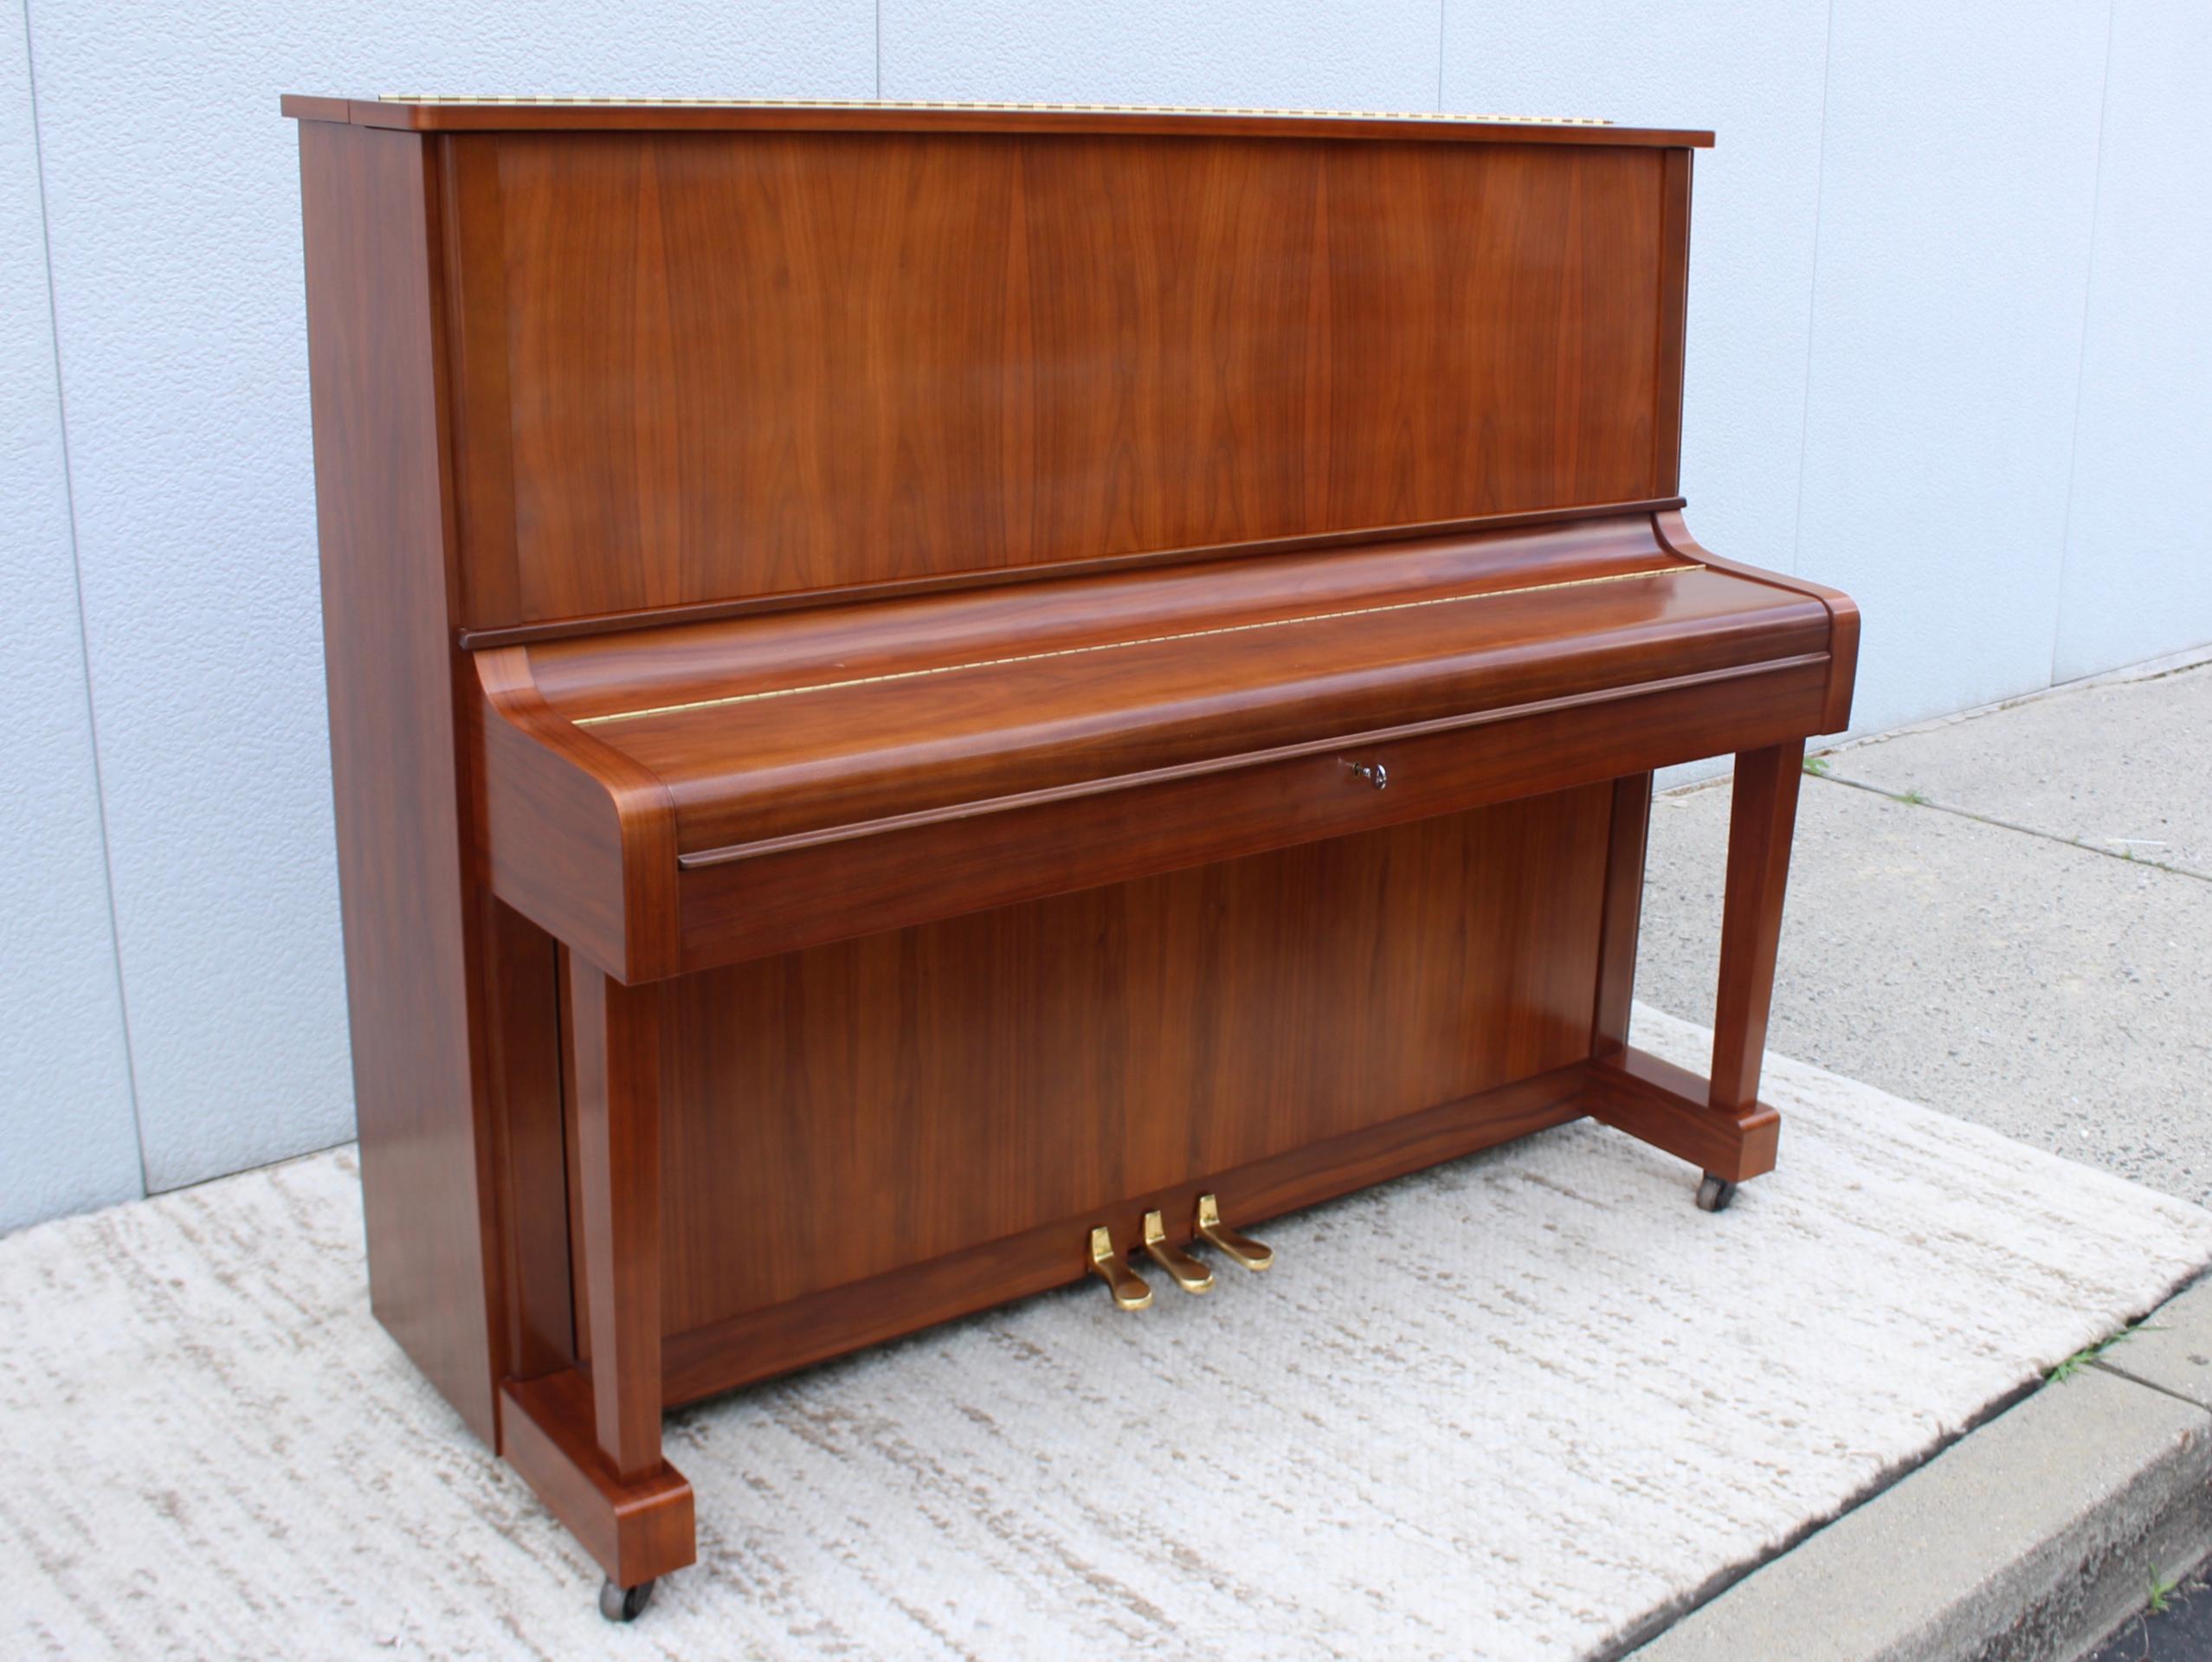 Japanese Mid-Century Modern Kawai Upright Piano